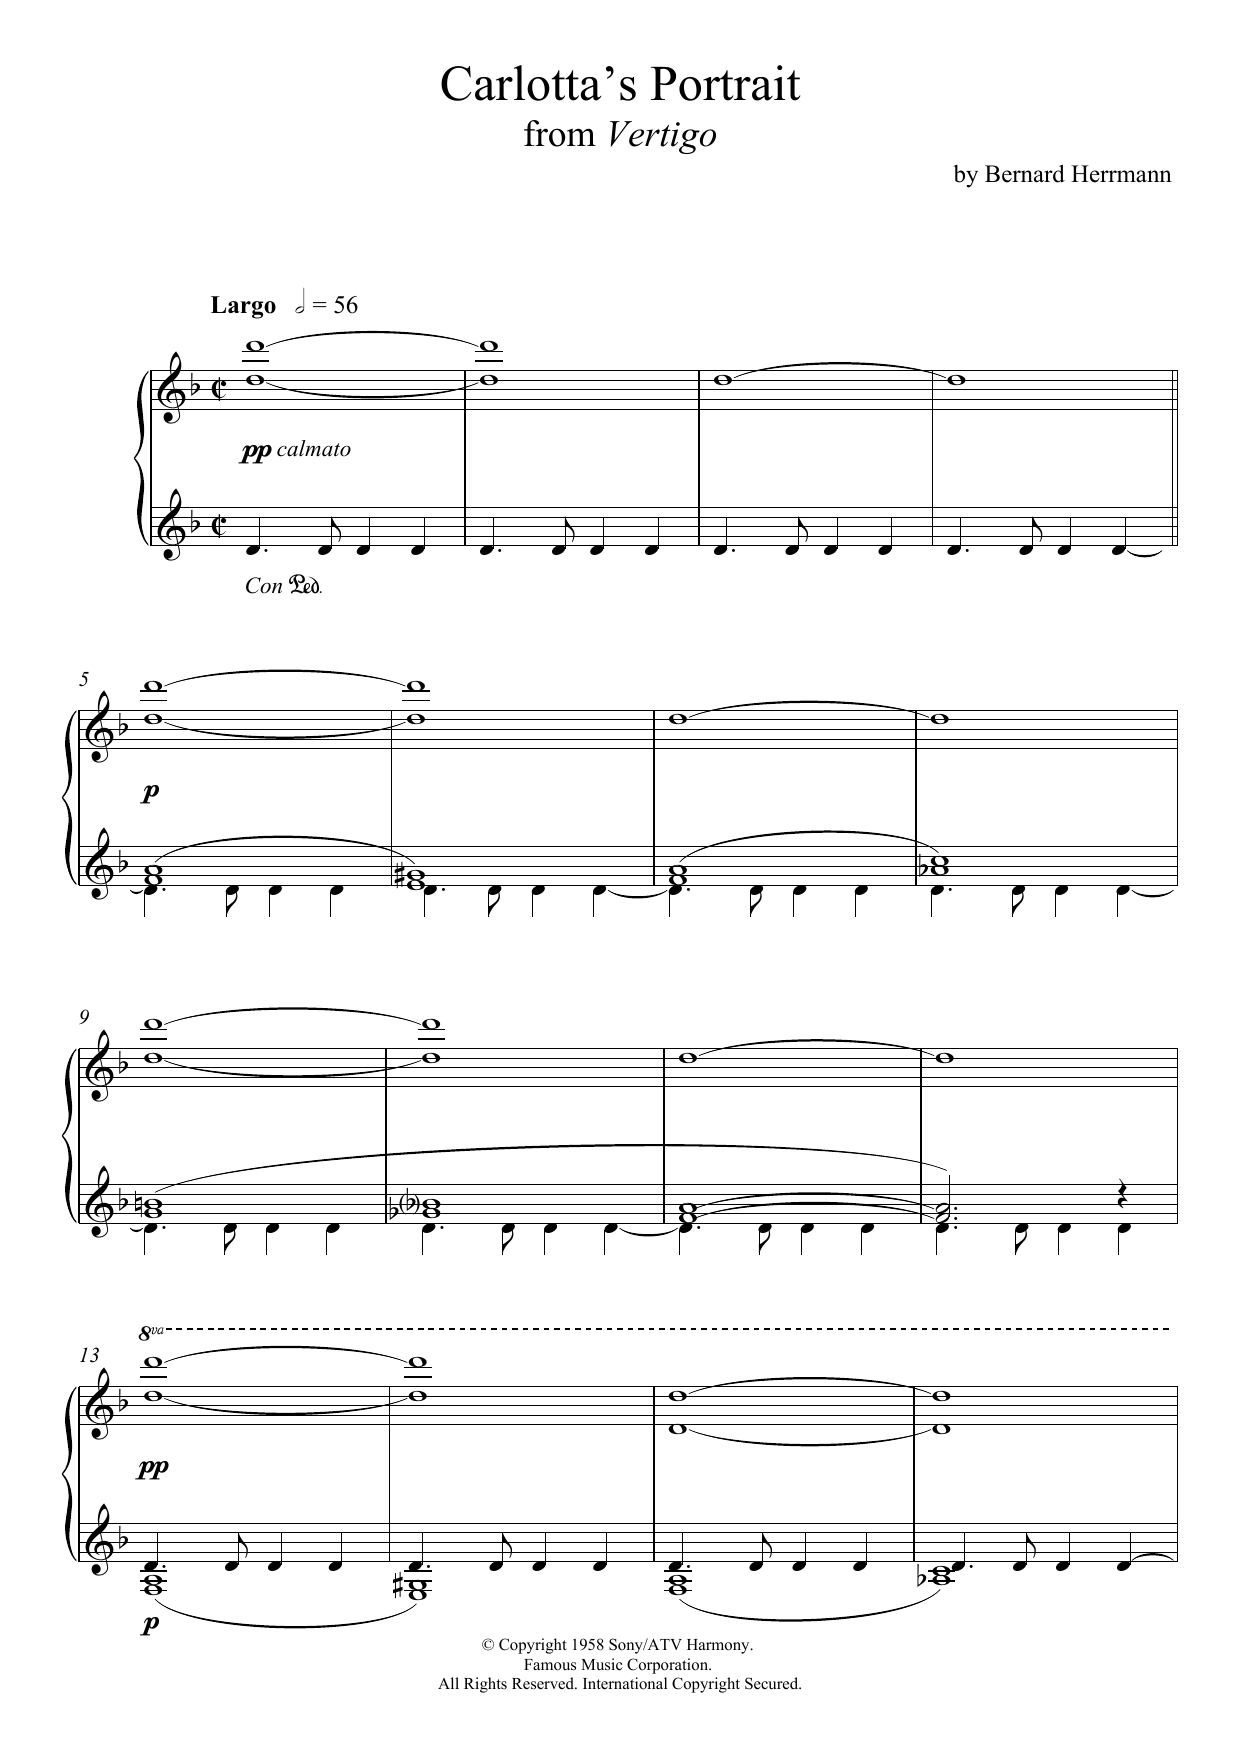 Download Bernard Herrmann Carlotta's Portrait From Vertigo Sheet Music and learn how to play Piano PDF digital score in minutes